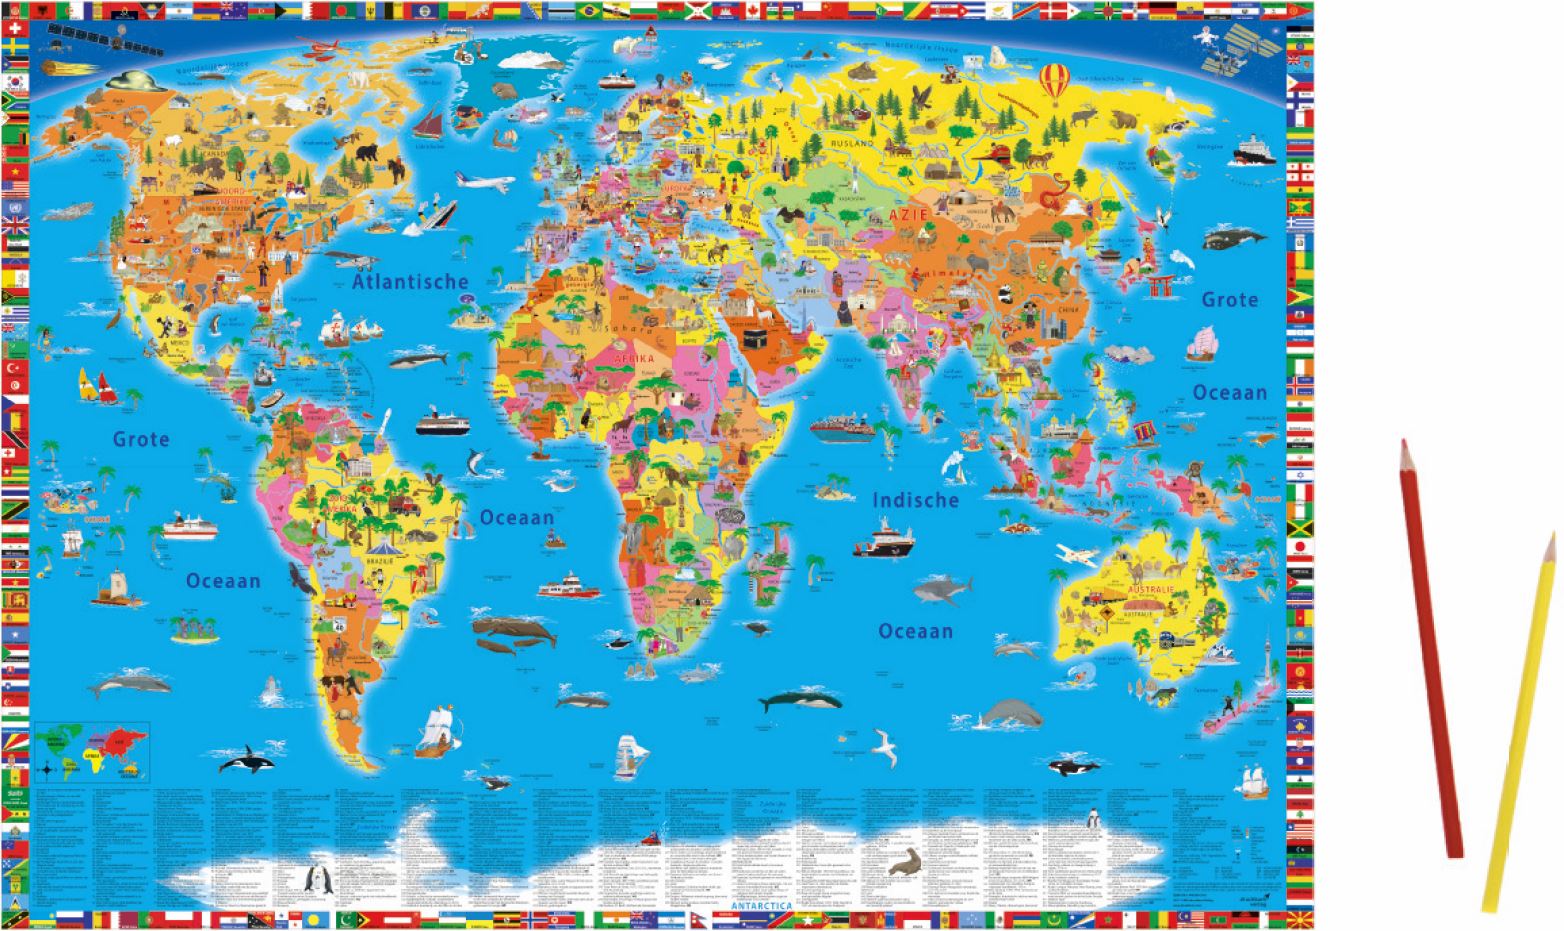 Muismat Geïllustreerde Politieke wereldkaart